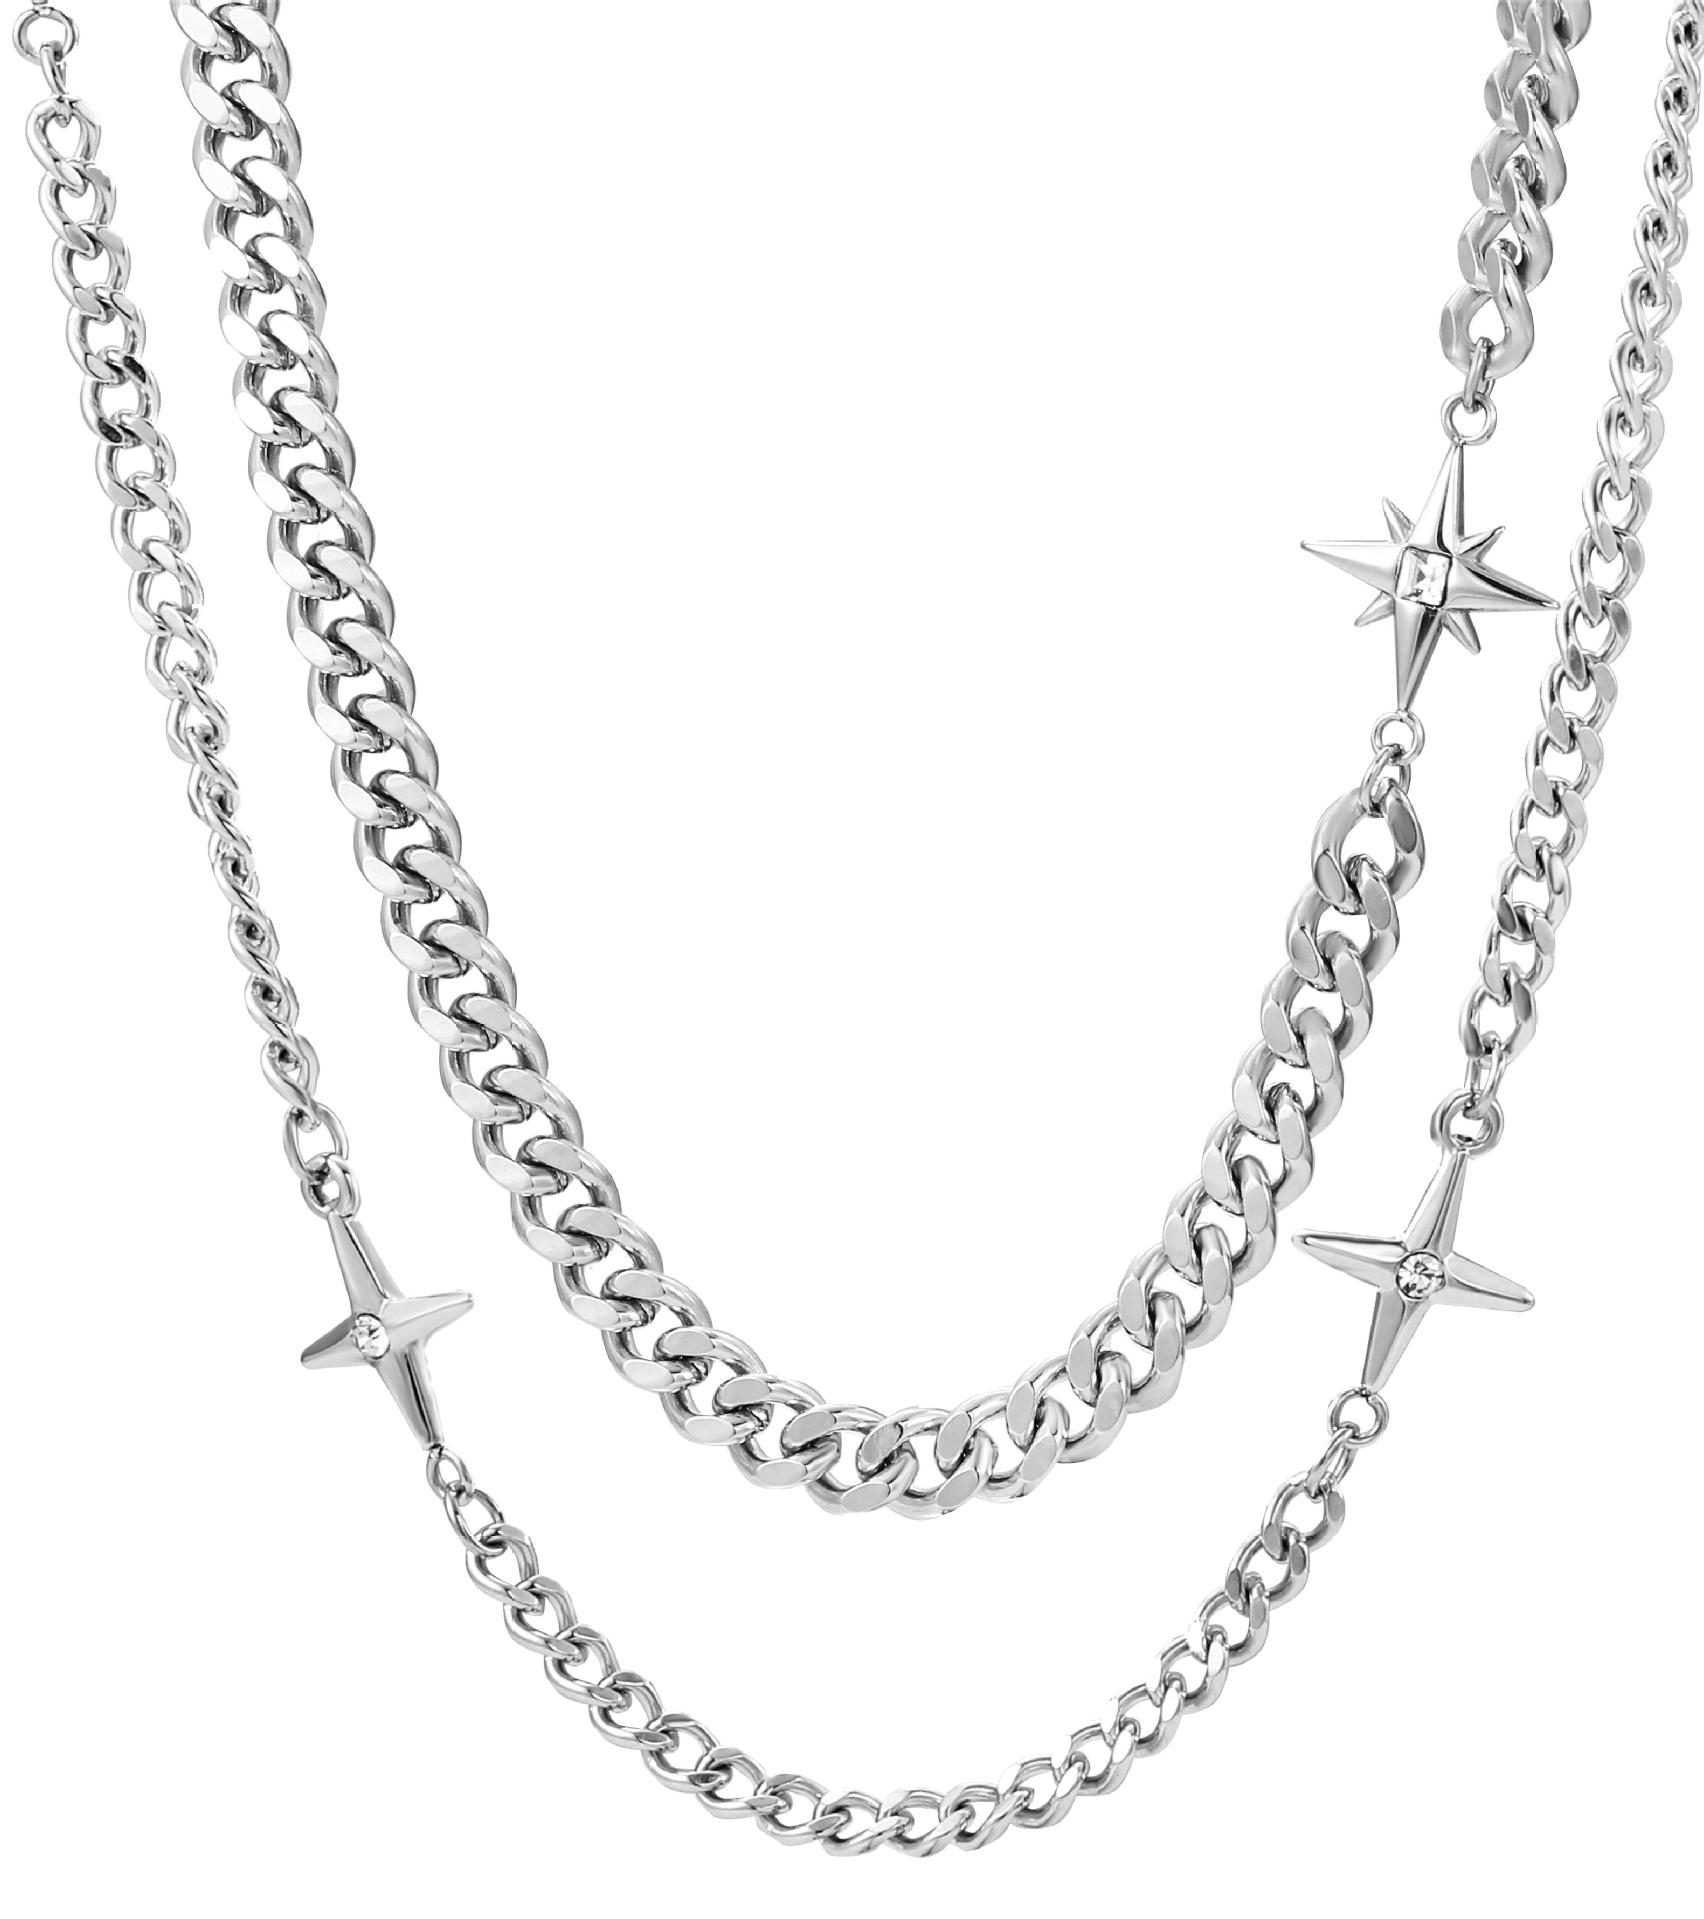 1:Two-piece necklace set